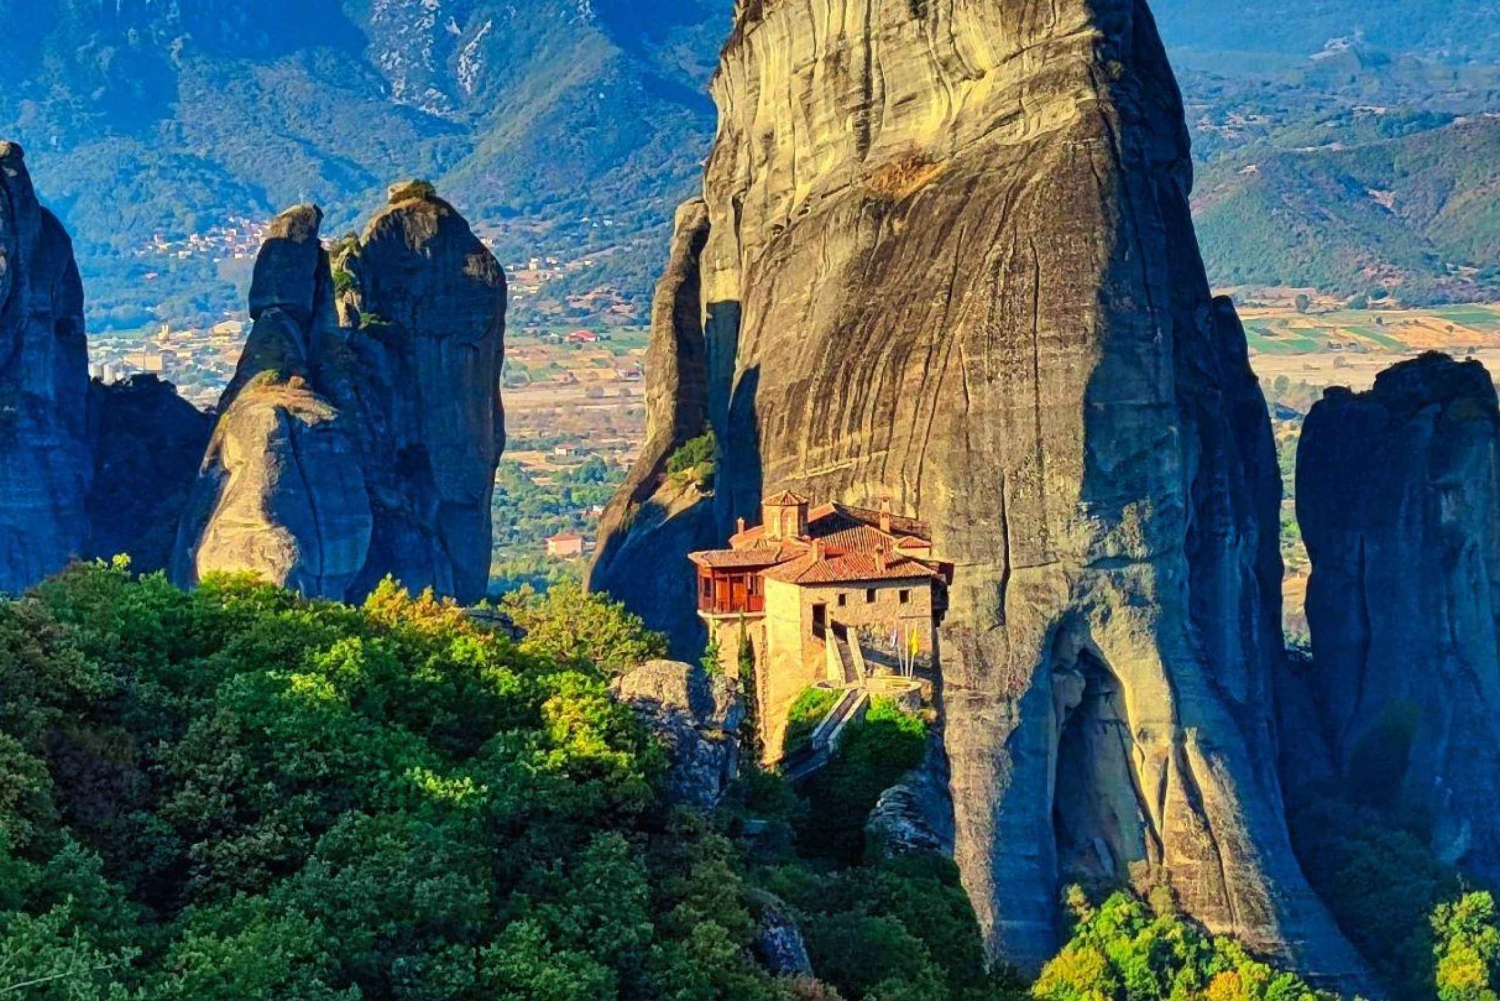 Greek panorama in 5 days